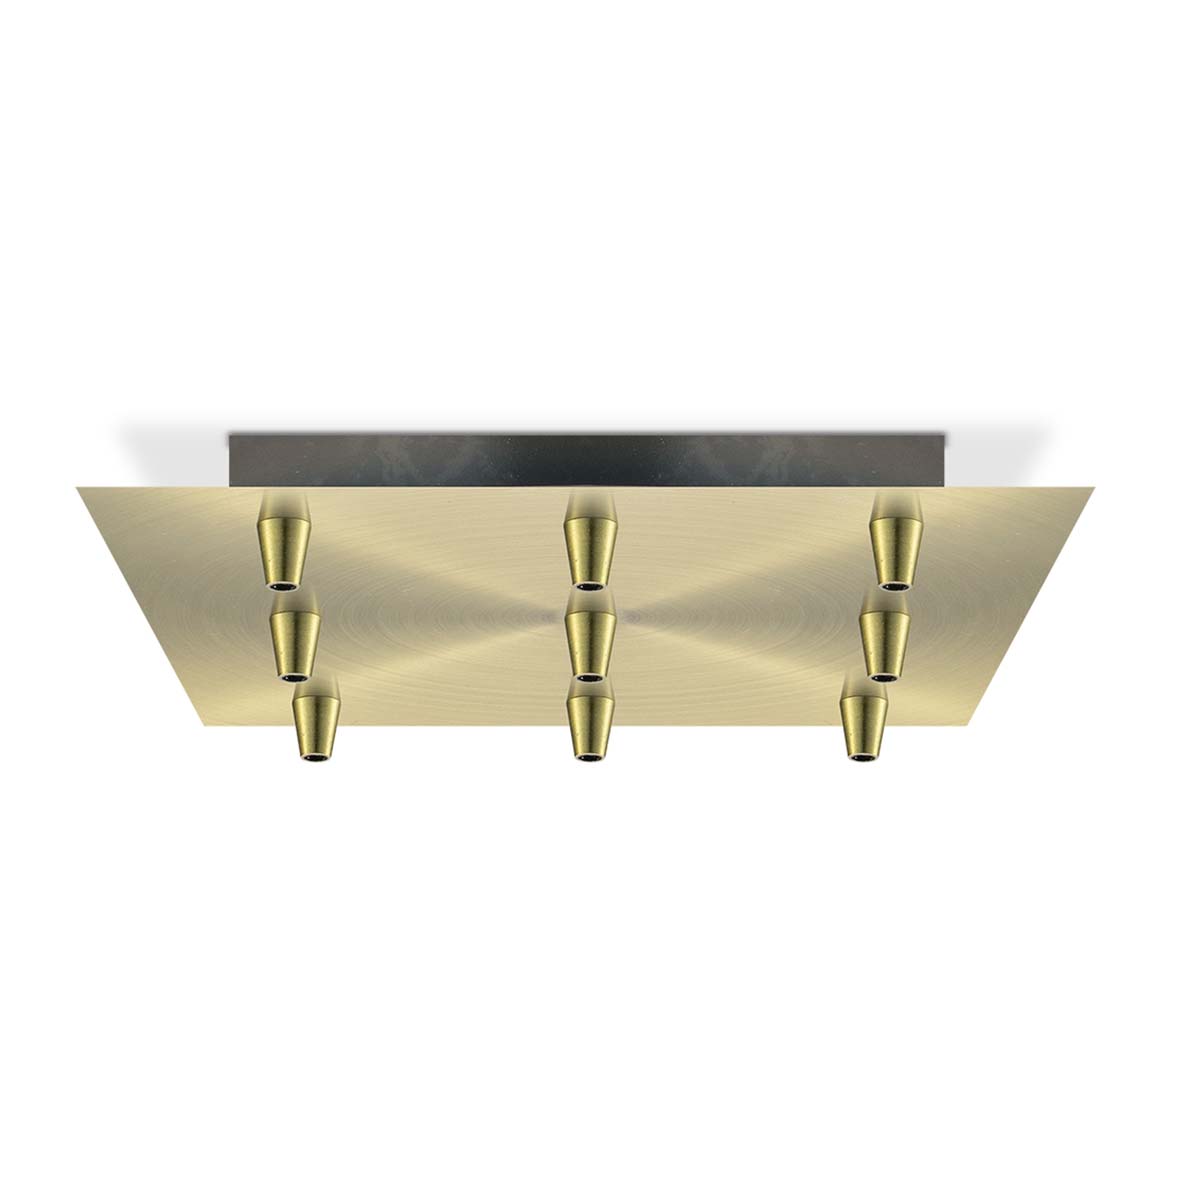 Tangla lighting - TLCP017-09GD - Metal 9 Lights square canopy large - adjustable gold